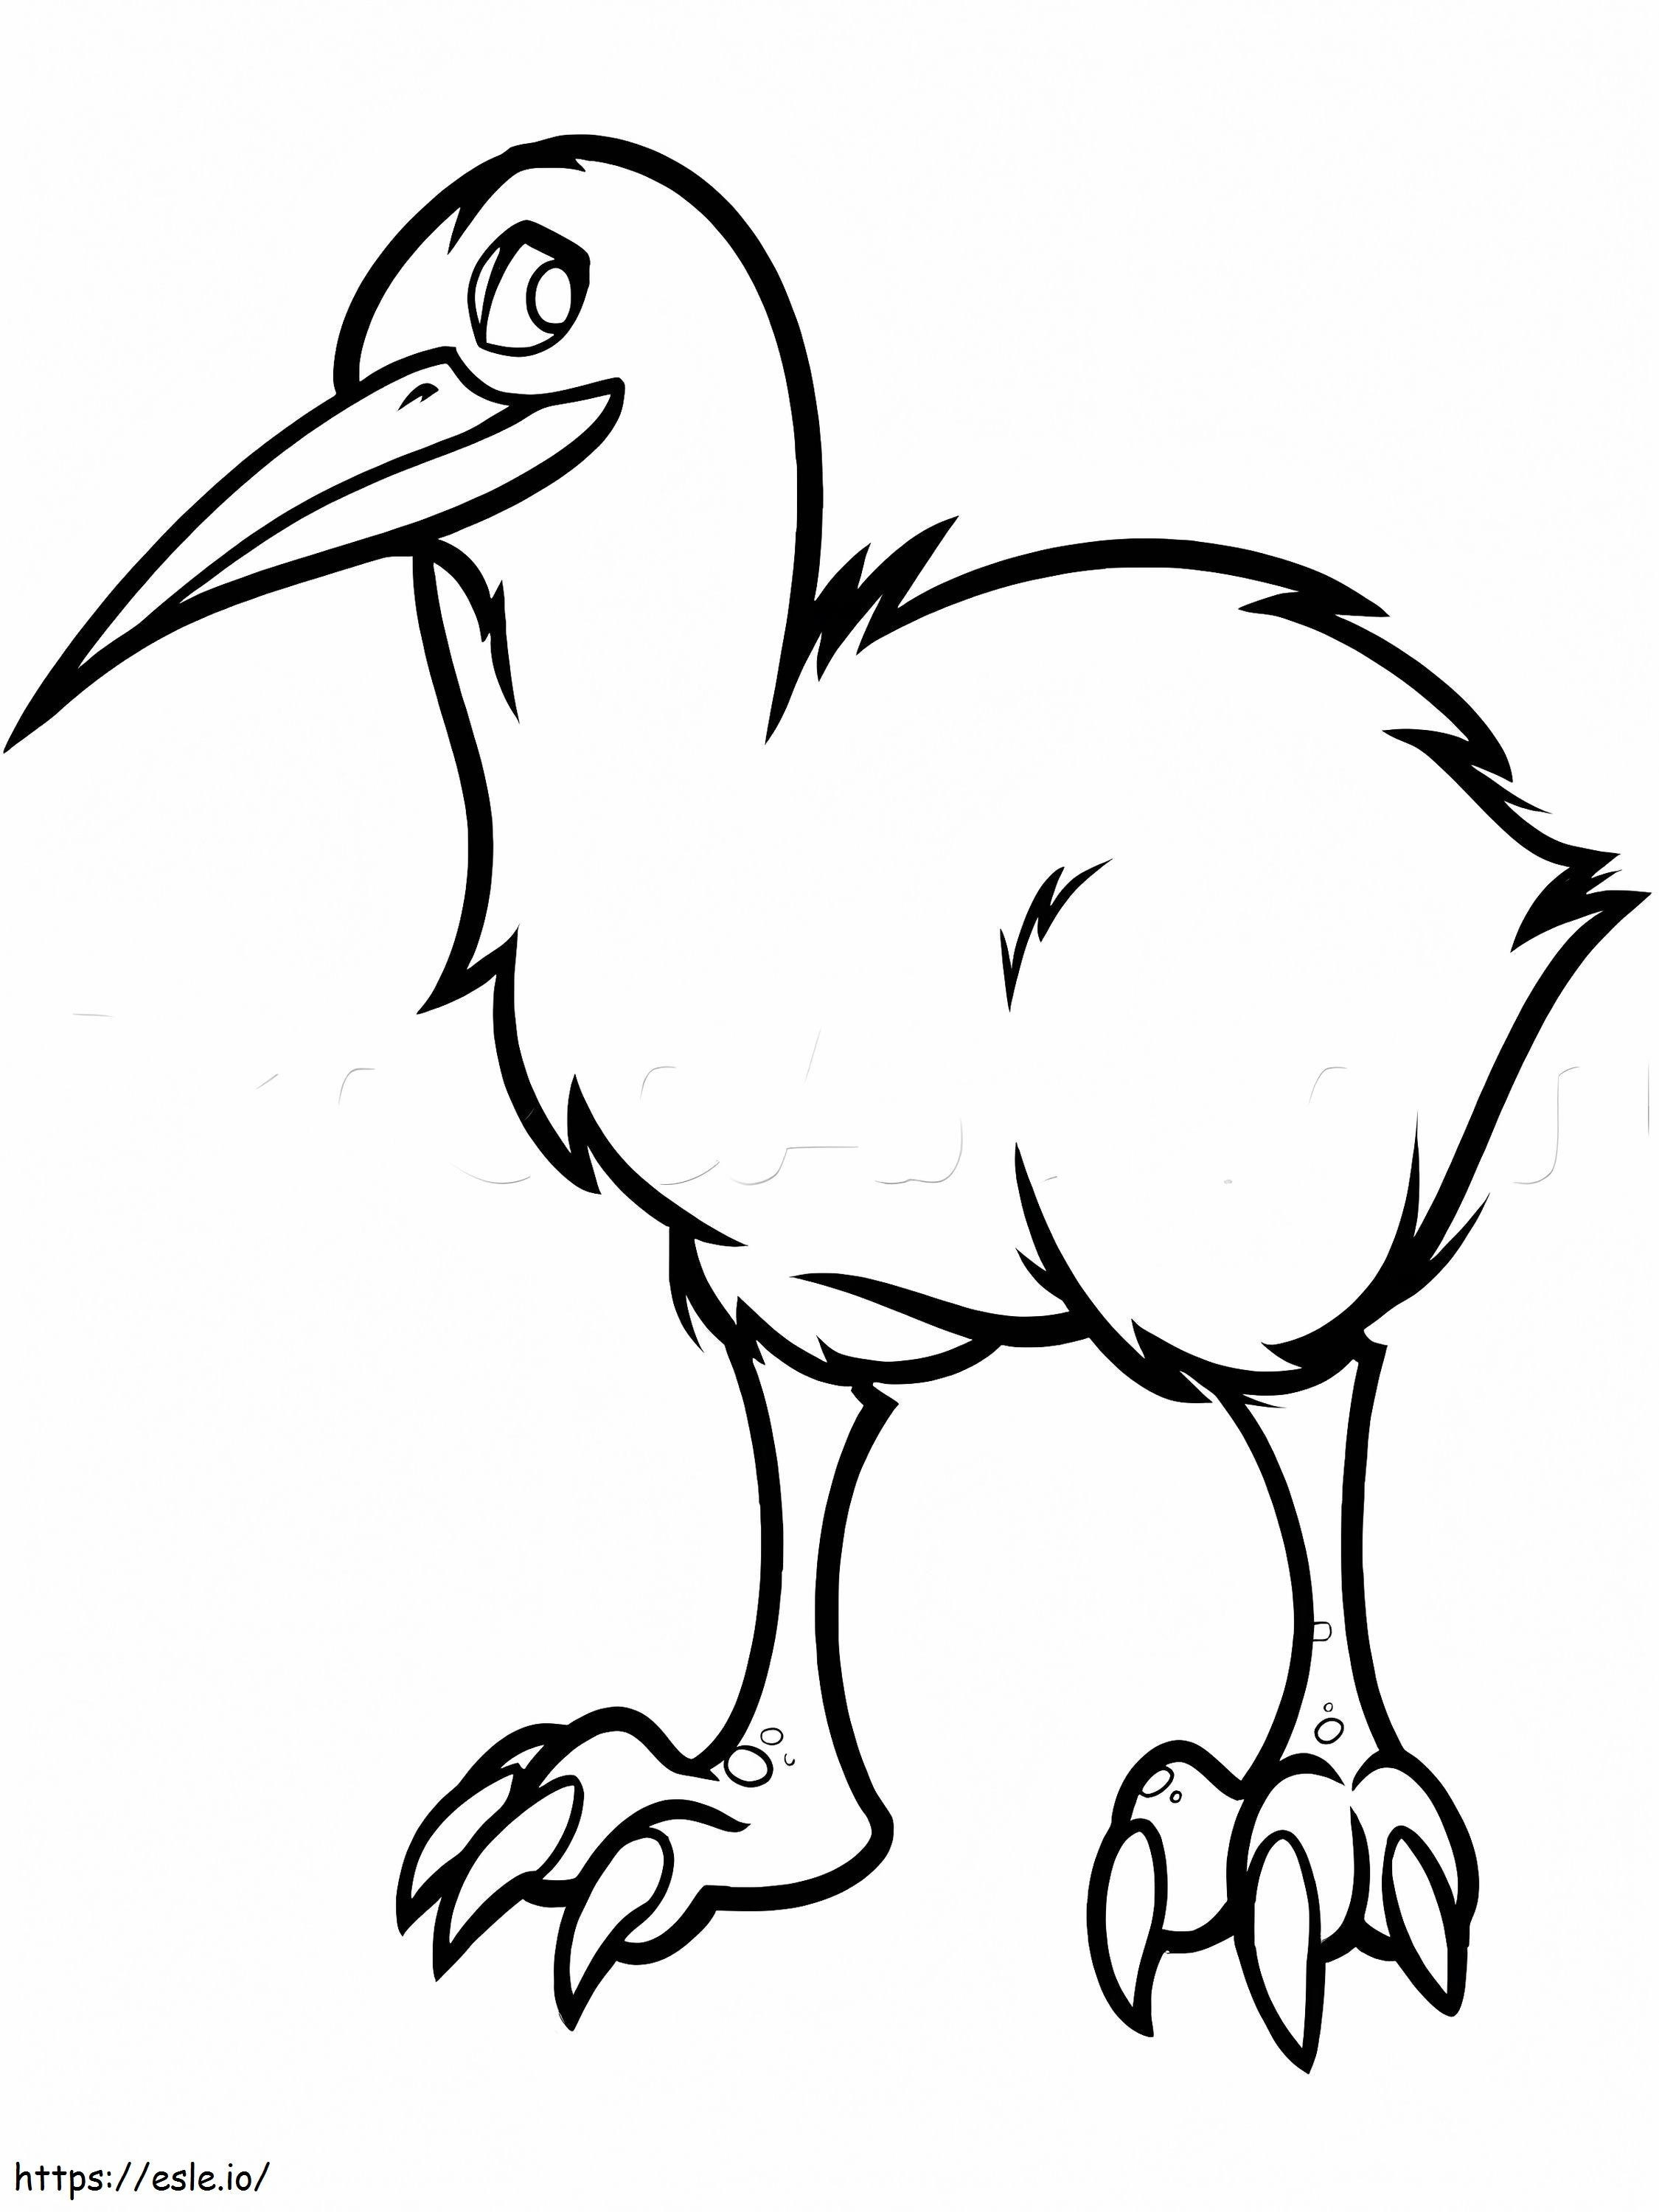 Pássaro Kiwi Incrível para colorir